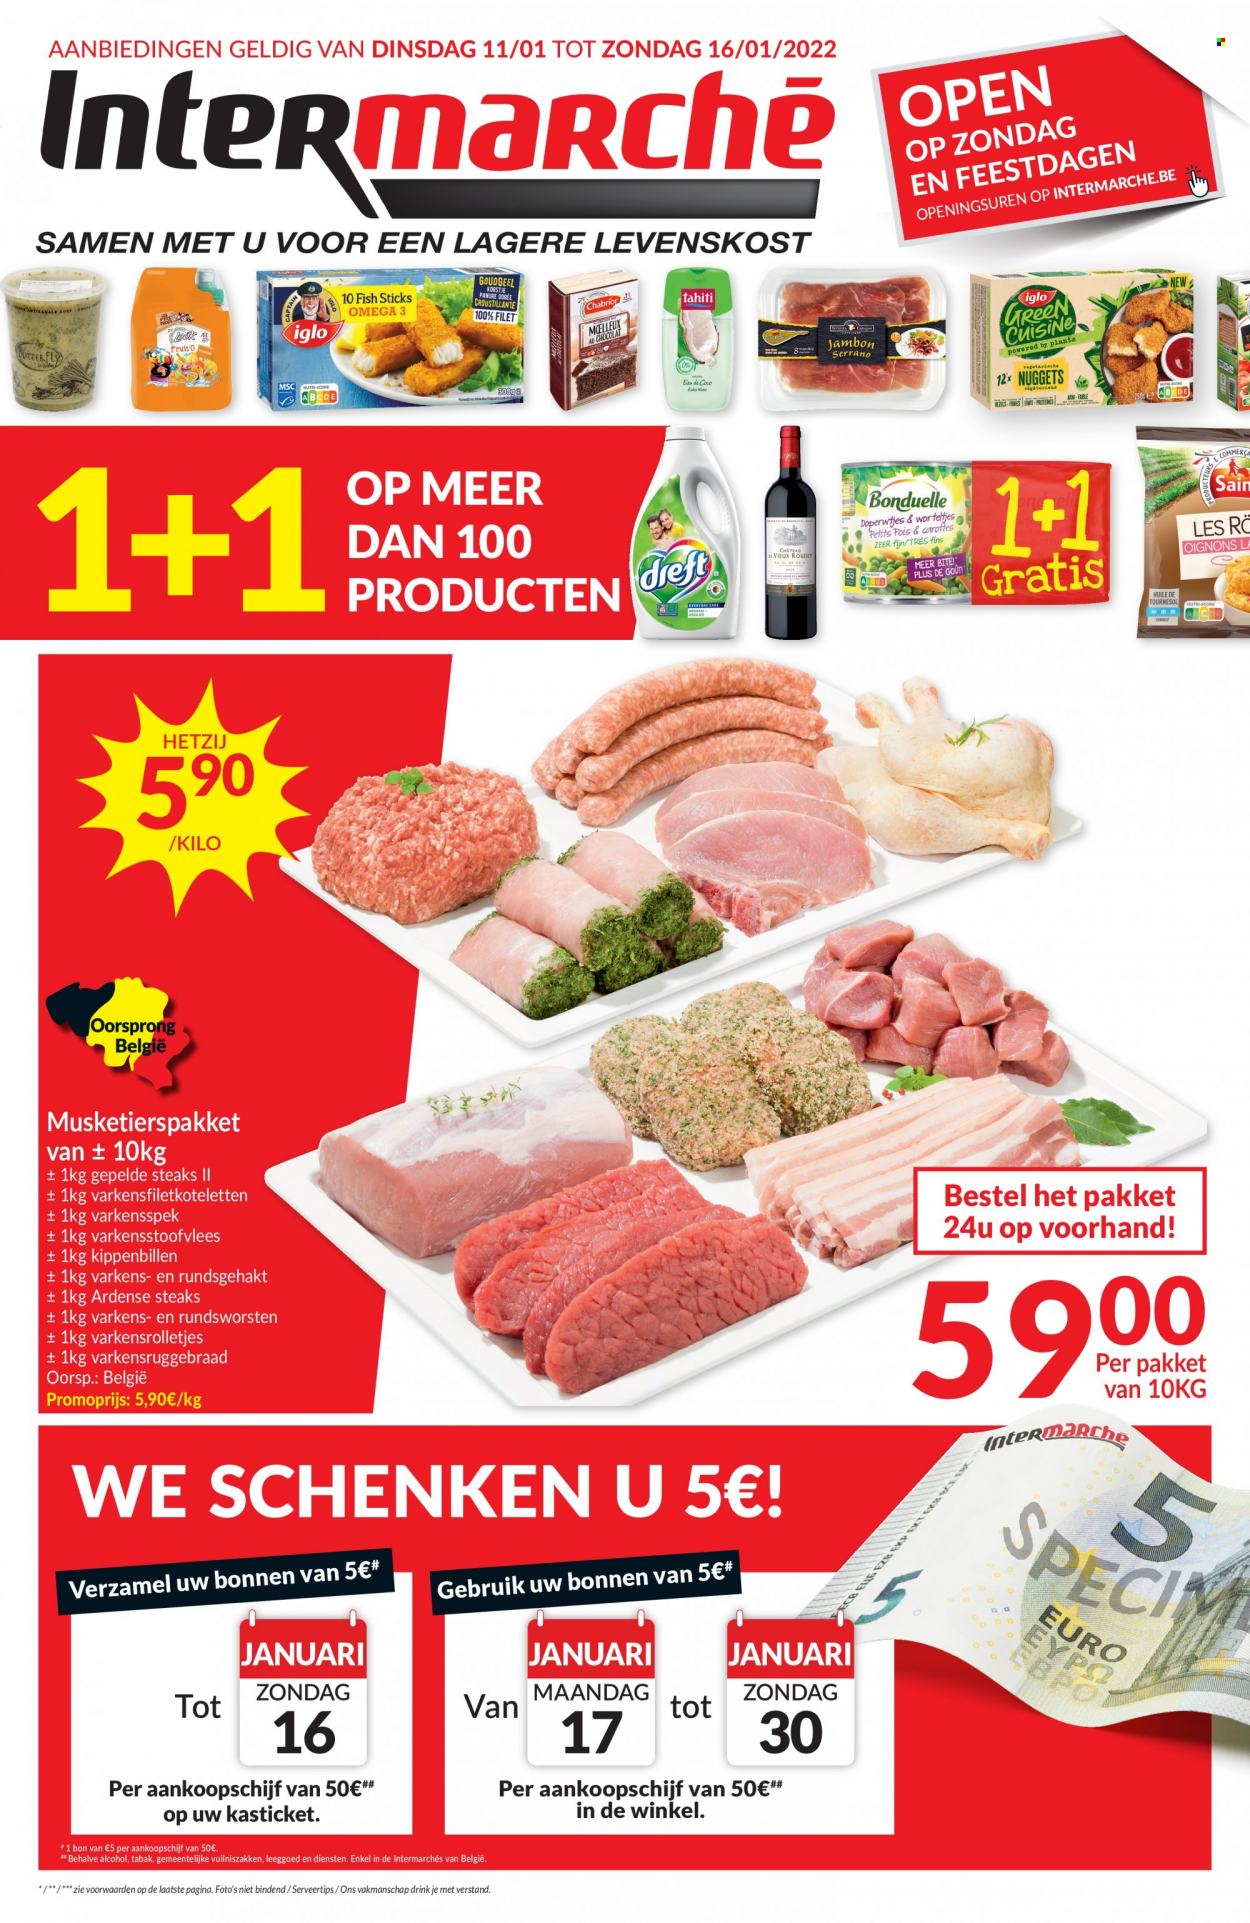 thumbnail - Intermarché-aanbieding - 11/01/2022 - 16/01/2022 -  producten in de aanbieding - vuilniszakken, steak. Pagina 1.